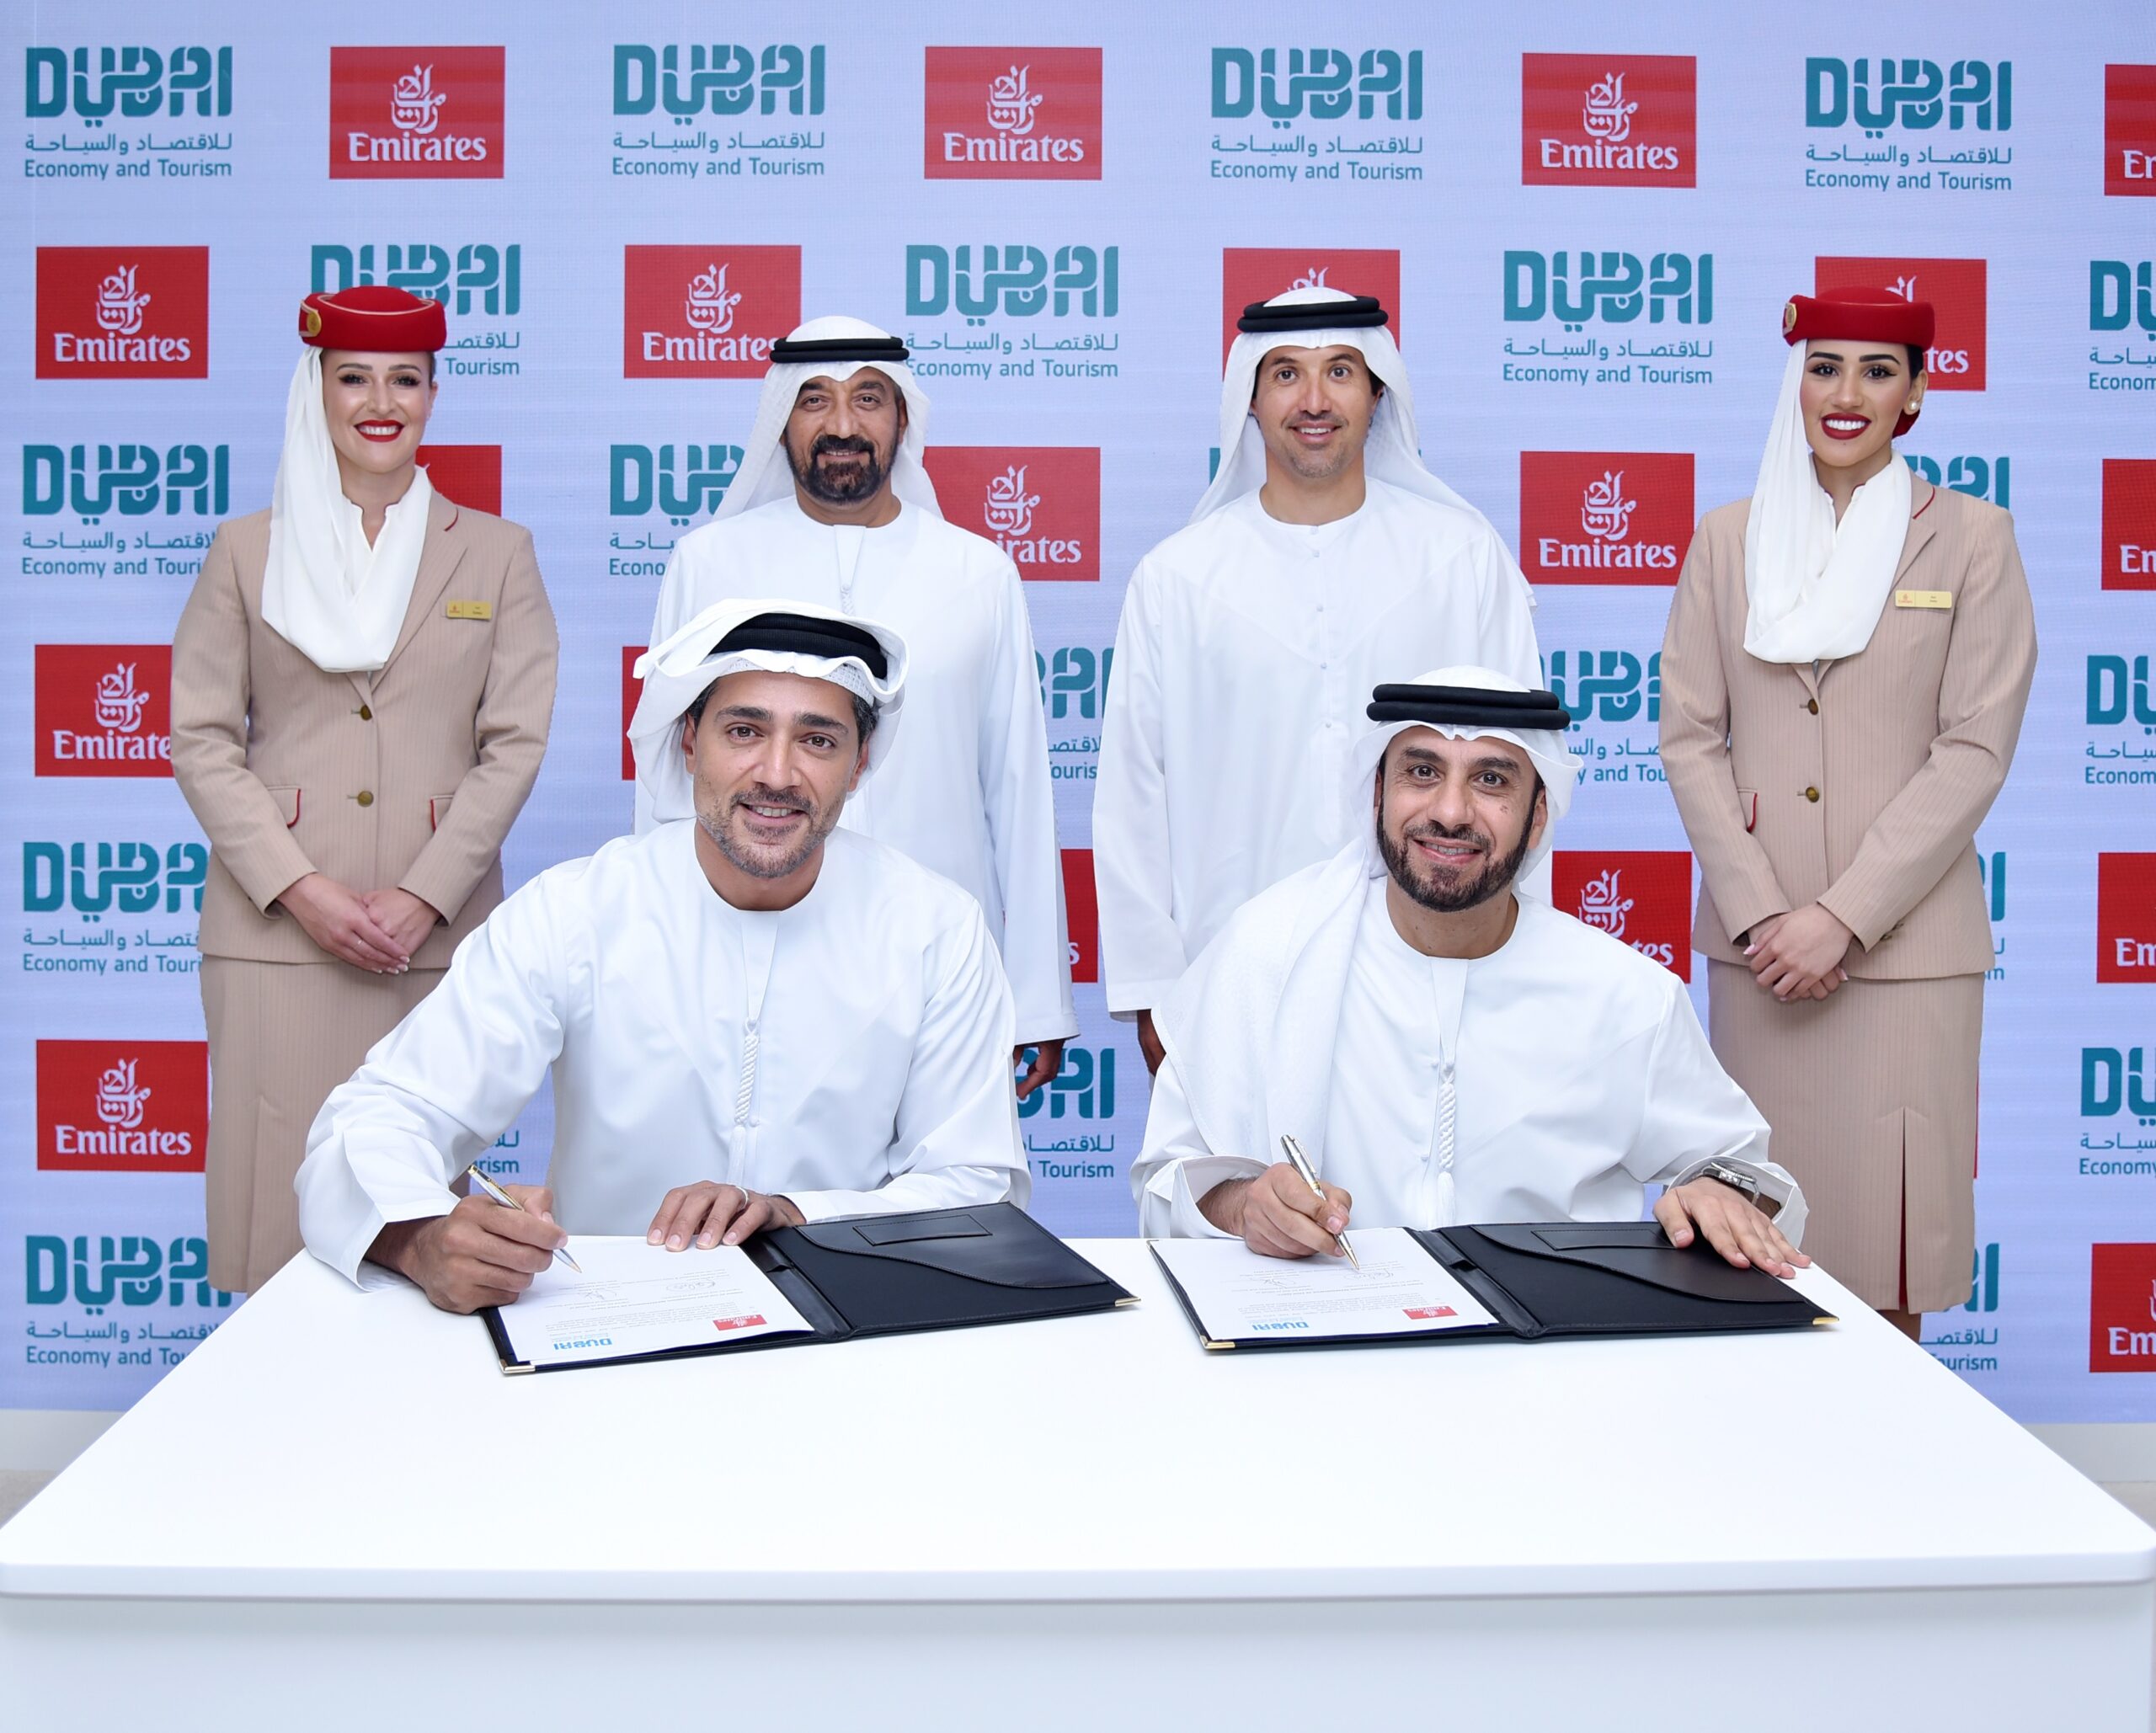 DET, Emirates ink deal to position Dubai as global business destination